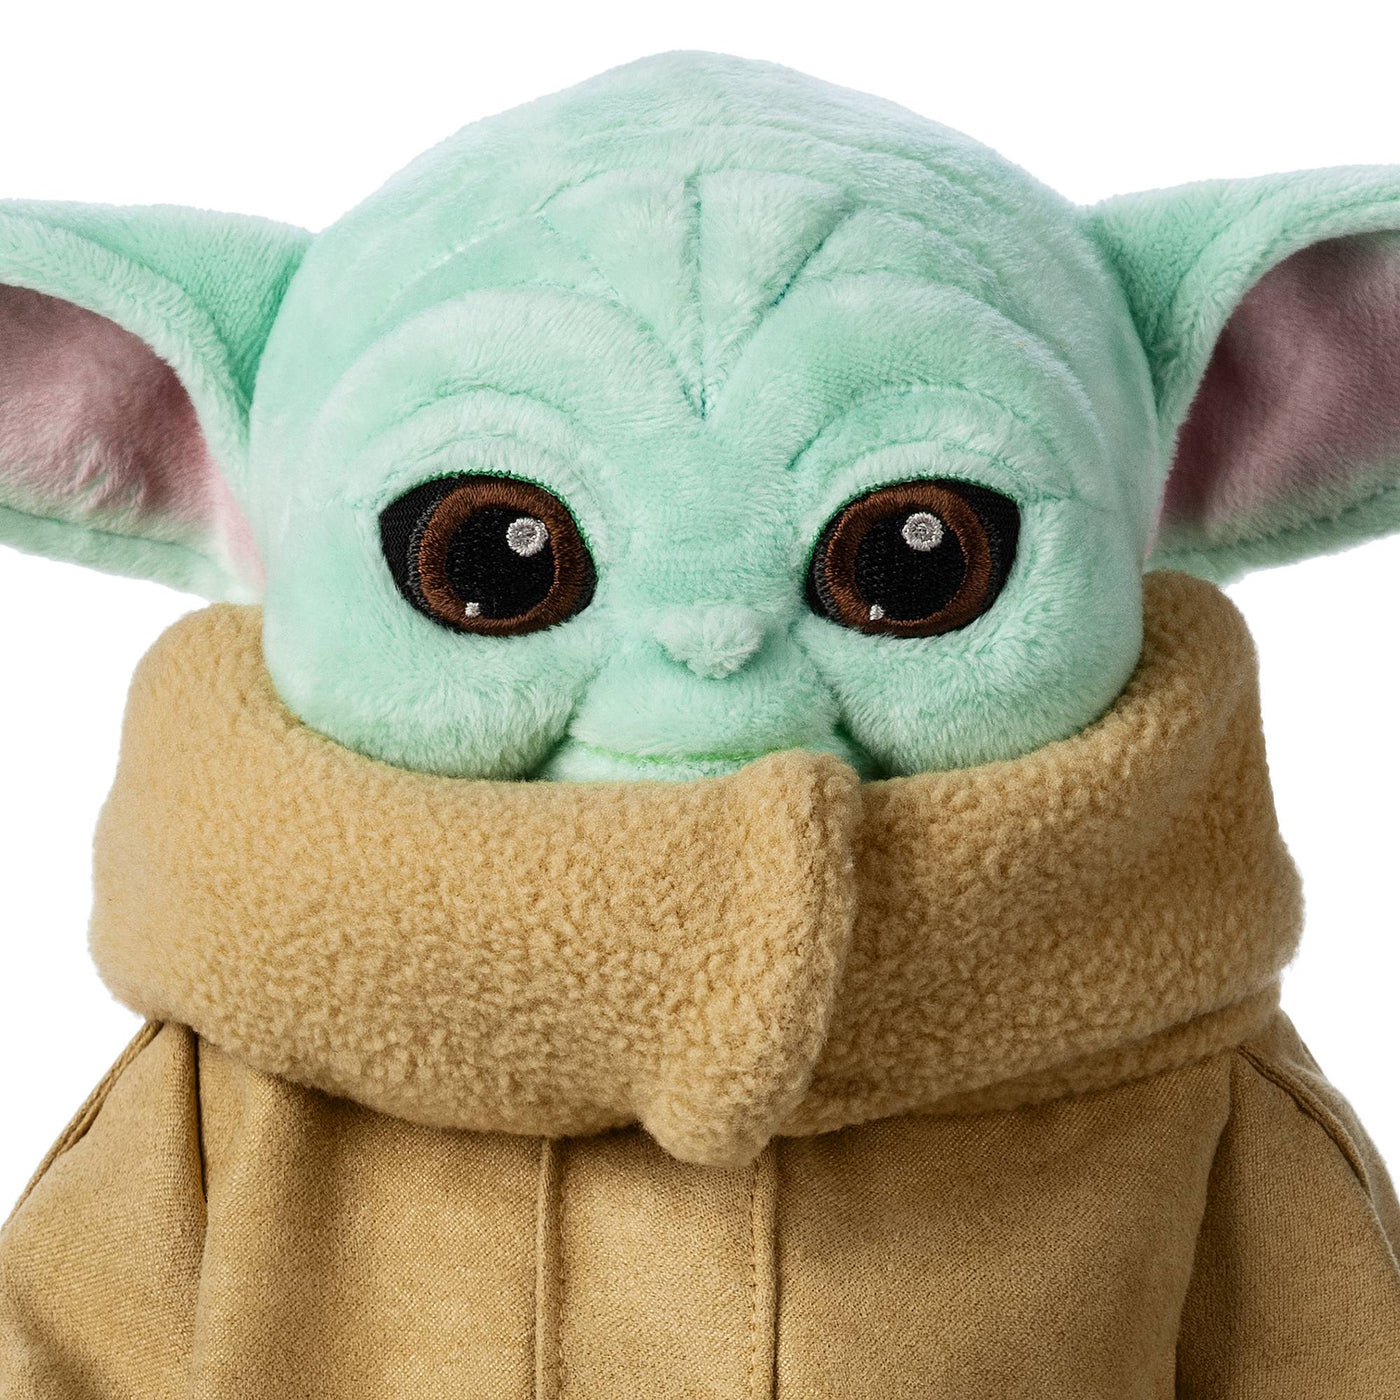 Disney Star Wars Yoda The Mandalorian The Child Plush New with Tags